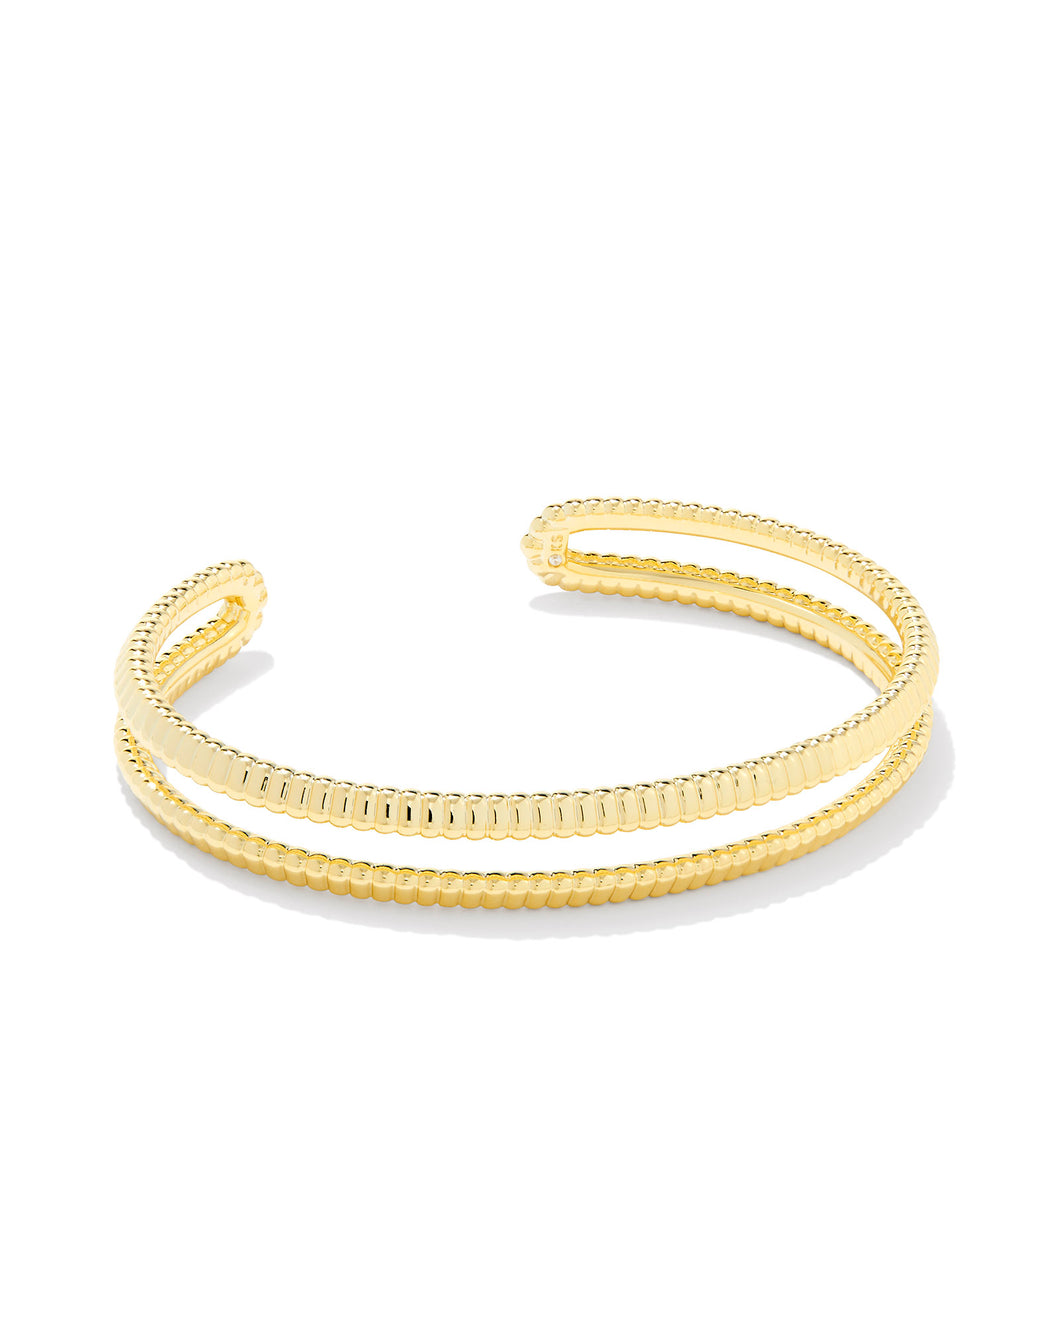 Kendra Scott: Layne Cuff Bracelet in Gold